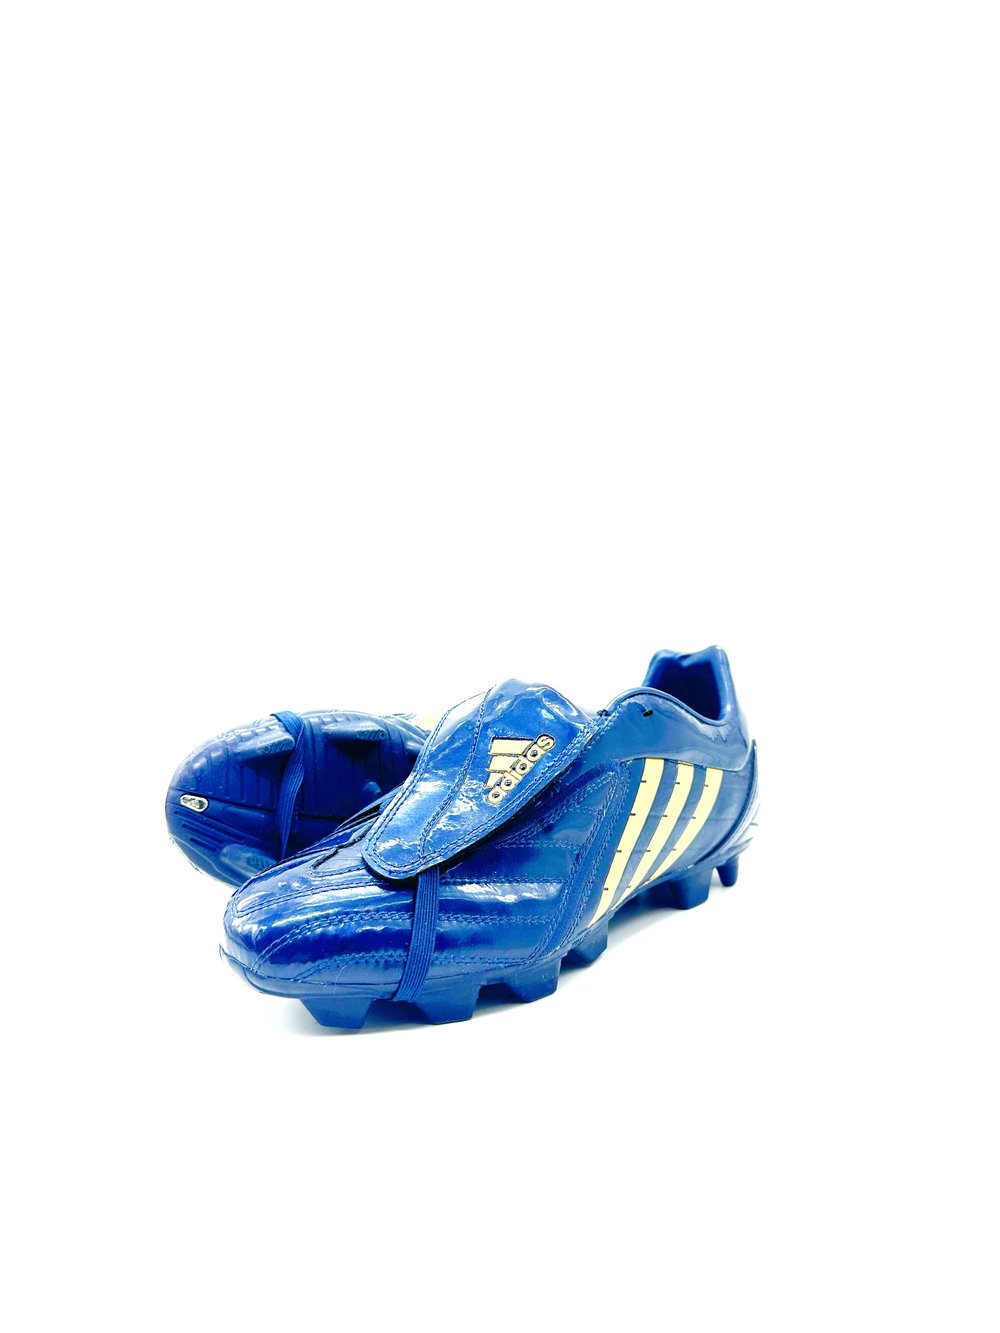 Image of Adidas predator Absolado Blue DB